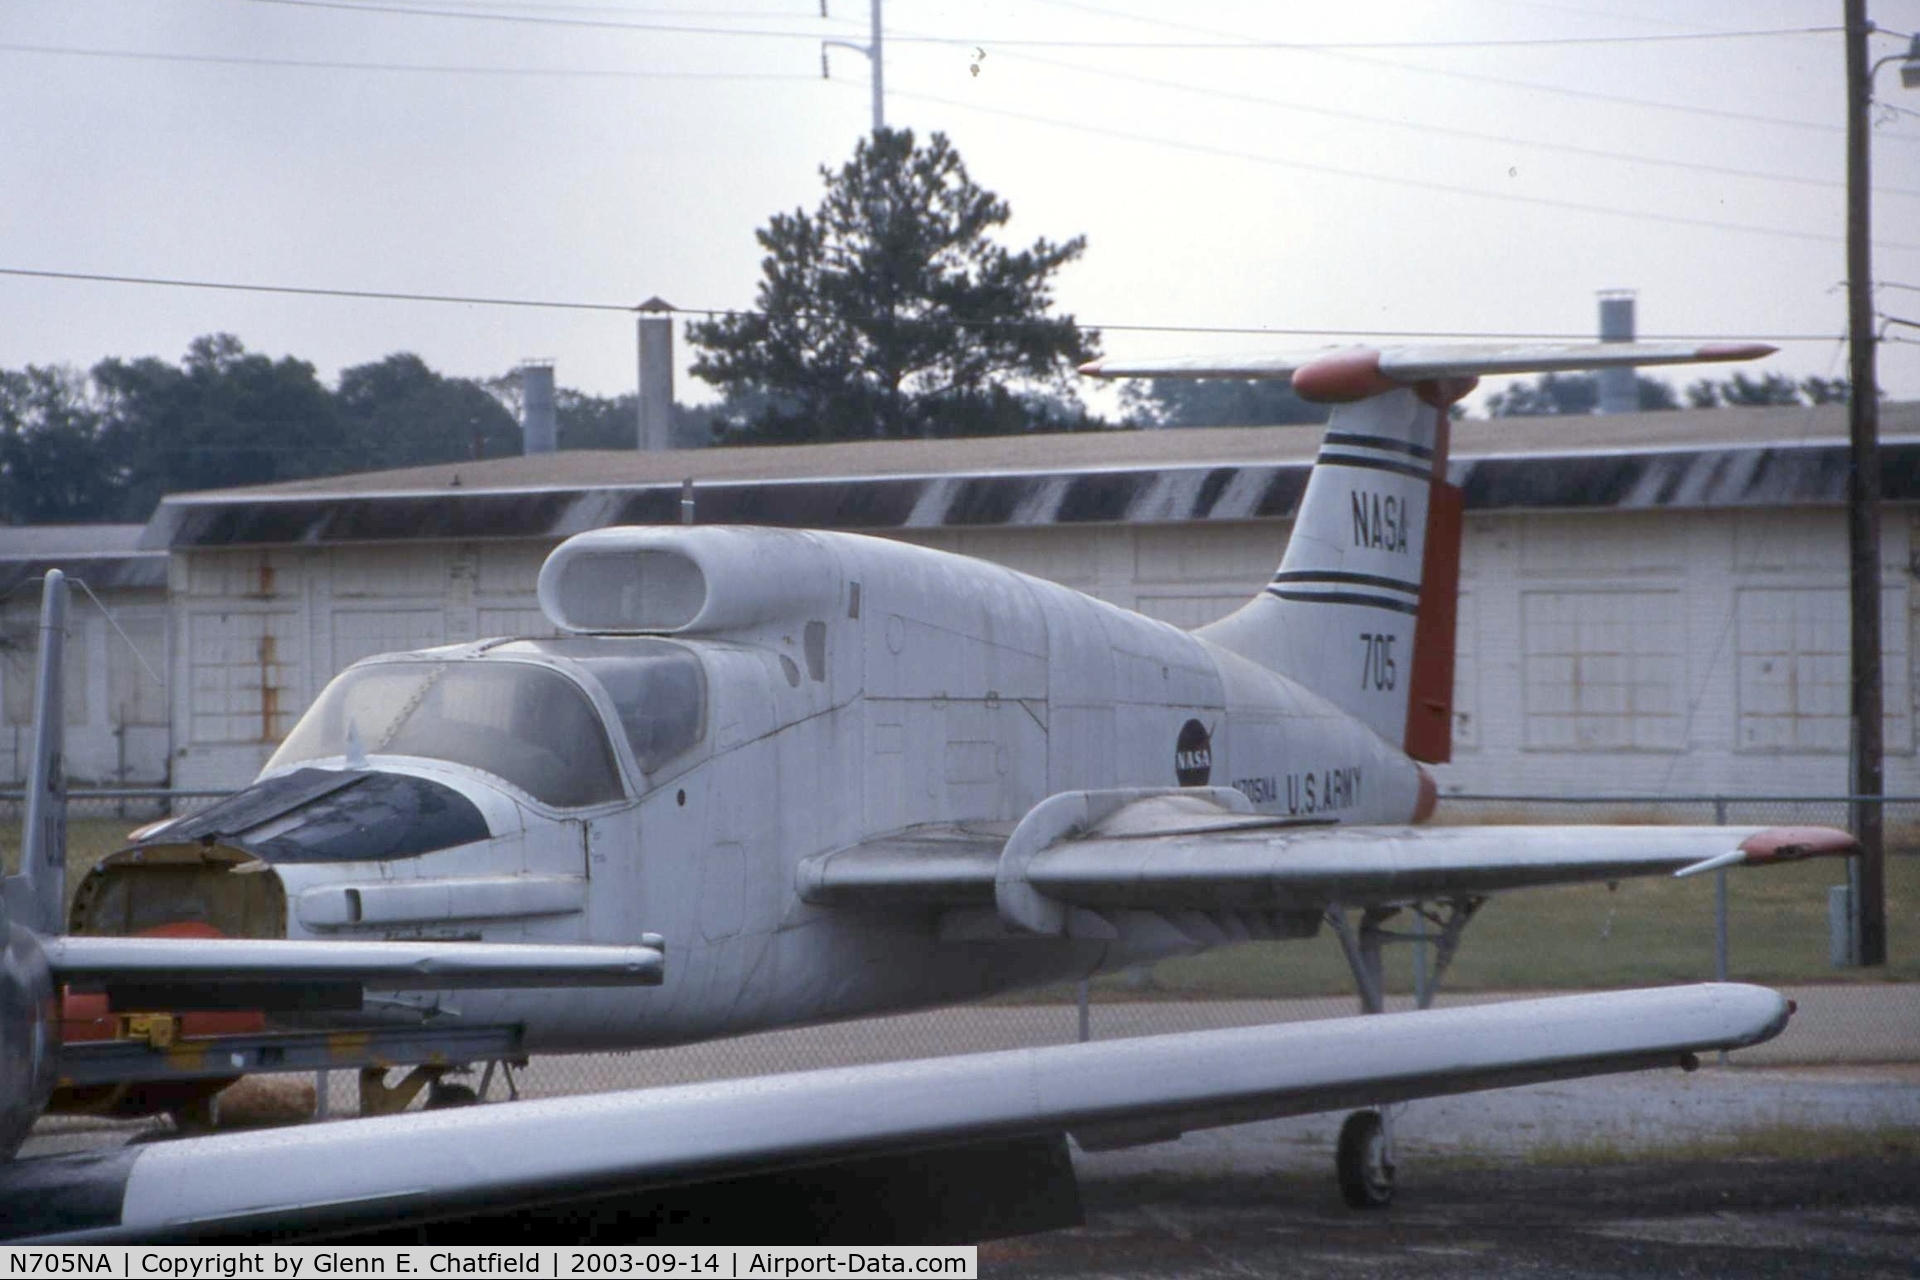 N705NA, 1962 Ryan Aeronautical XV-5B C/N Unknown, XV-5B 62-4506 at the Army Aviation Museum